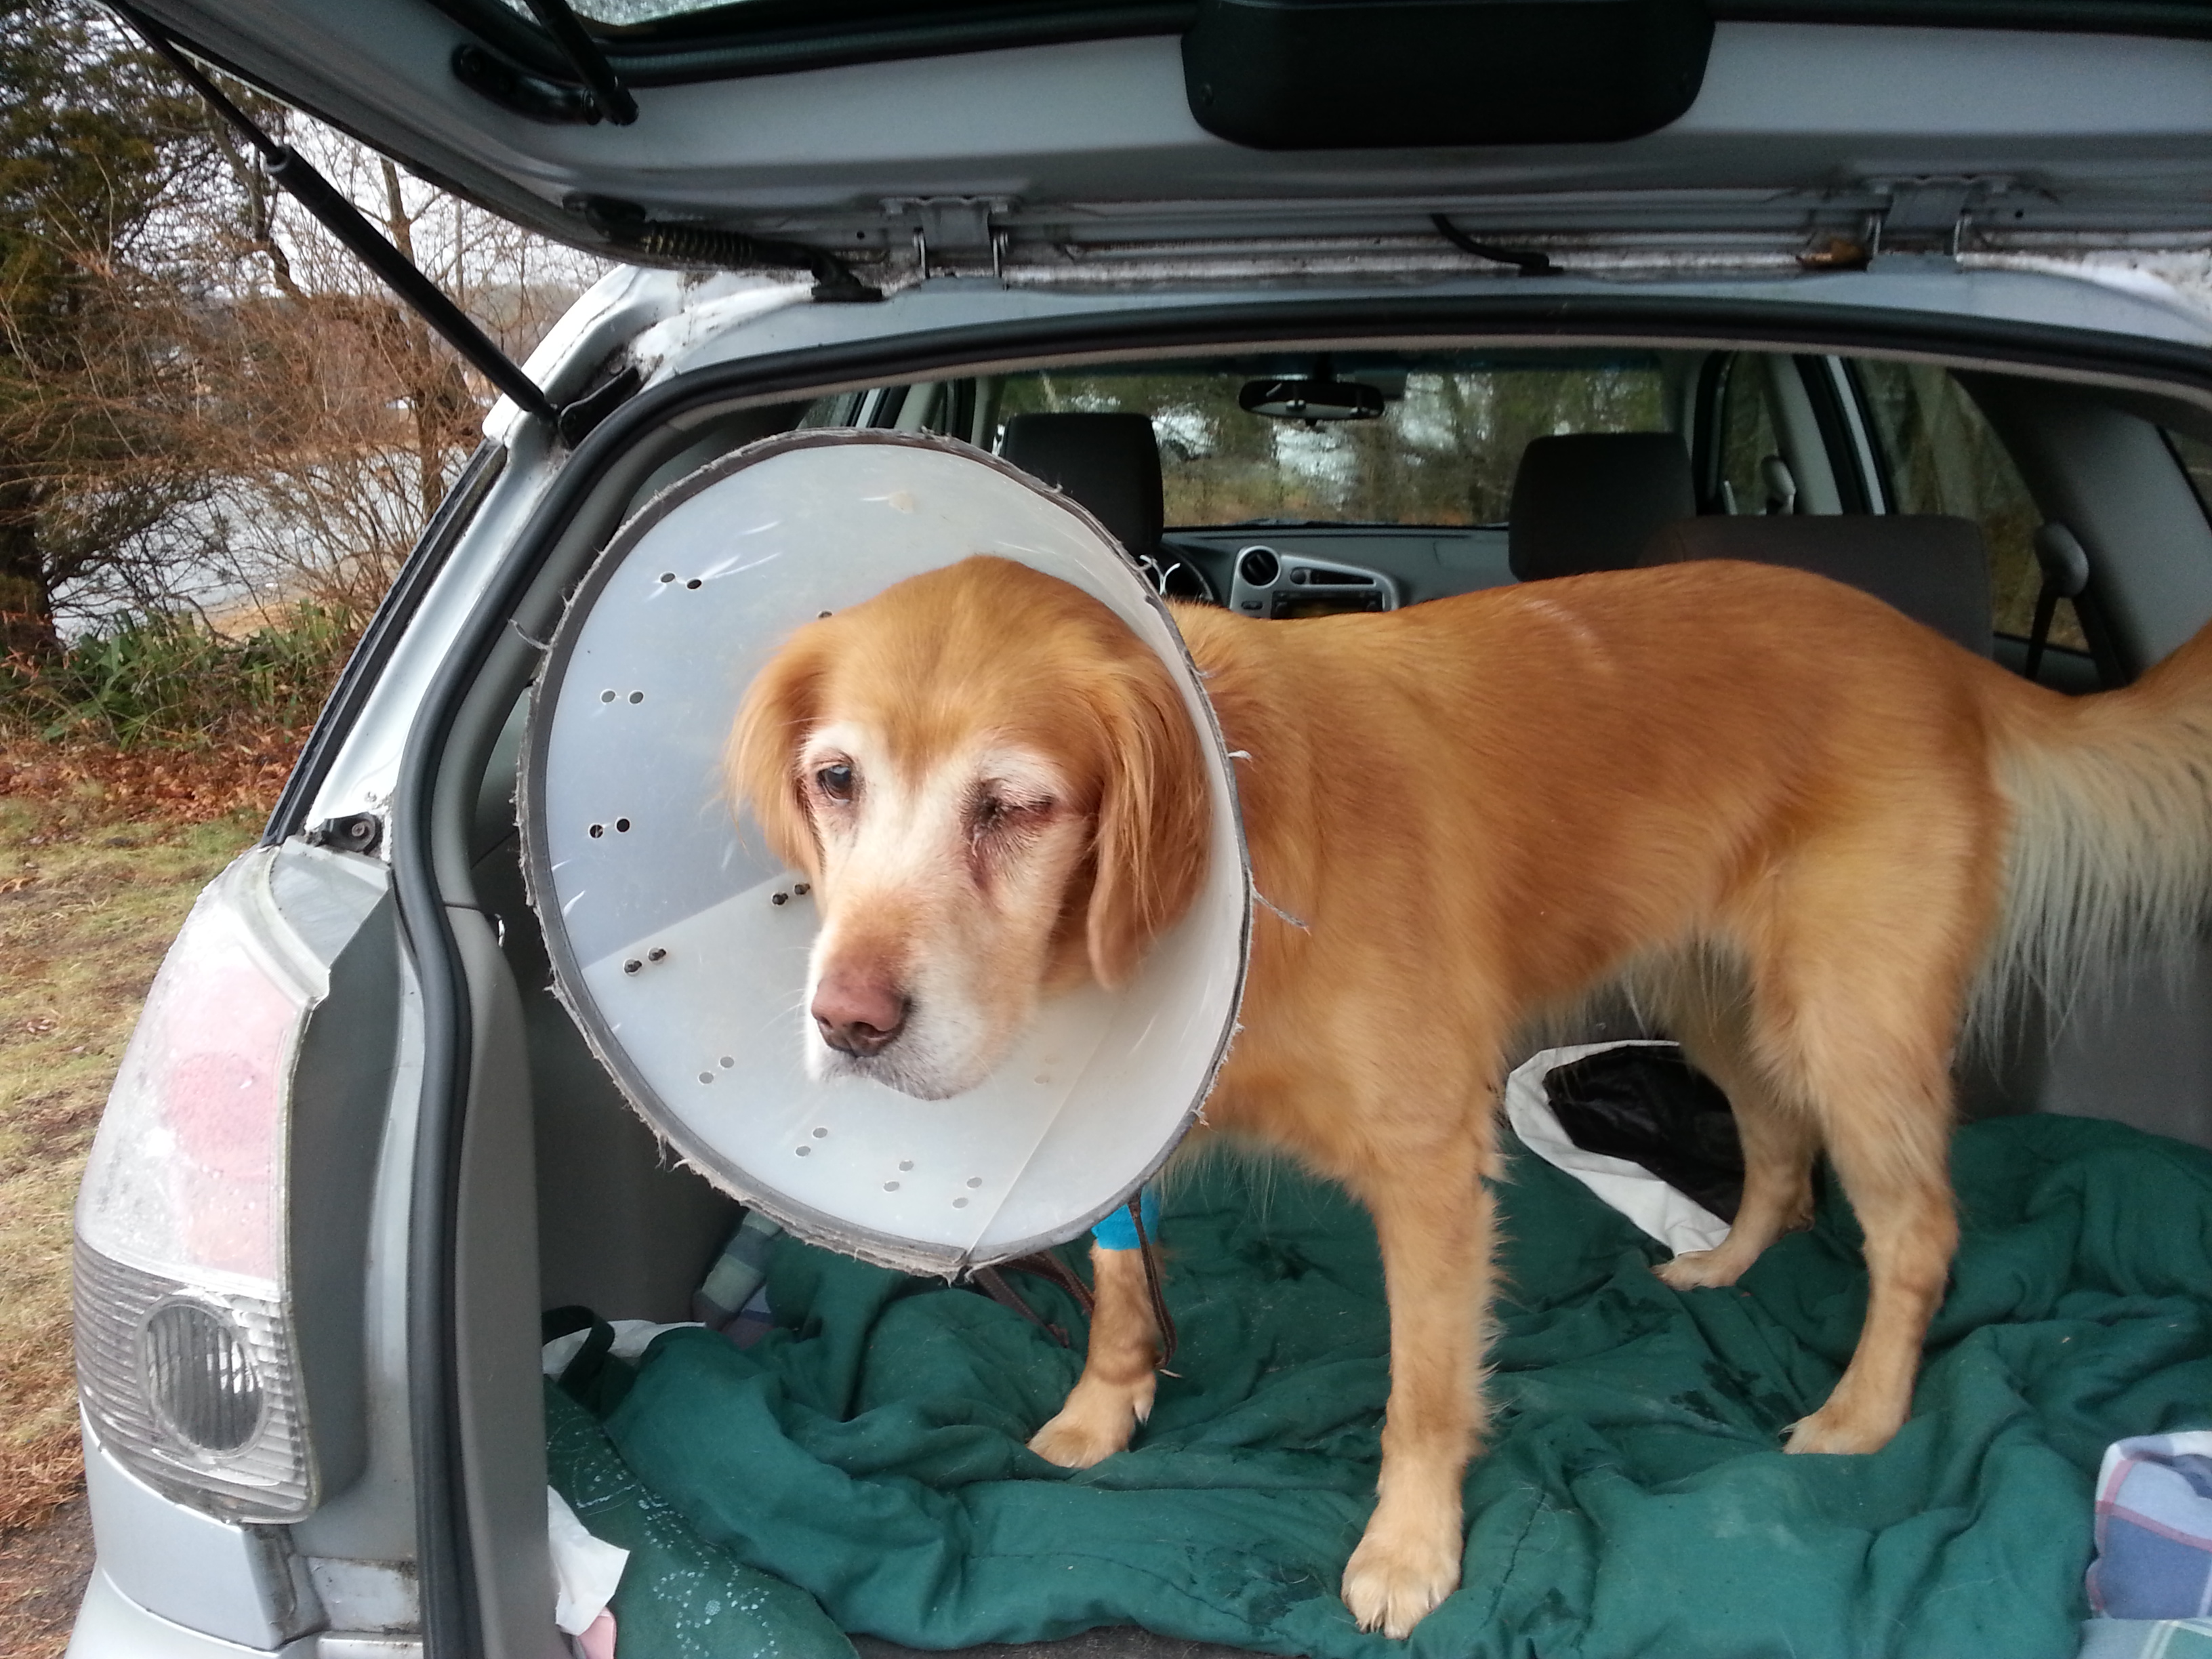 Dog with eye sewn shut, wearing cone collar, in rear of hatchback